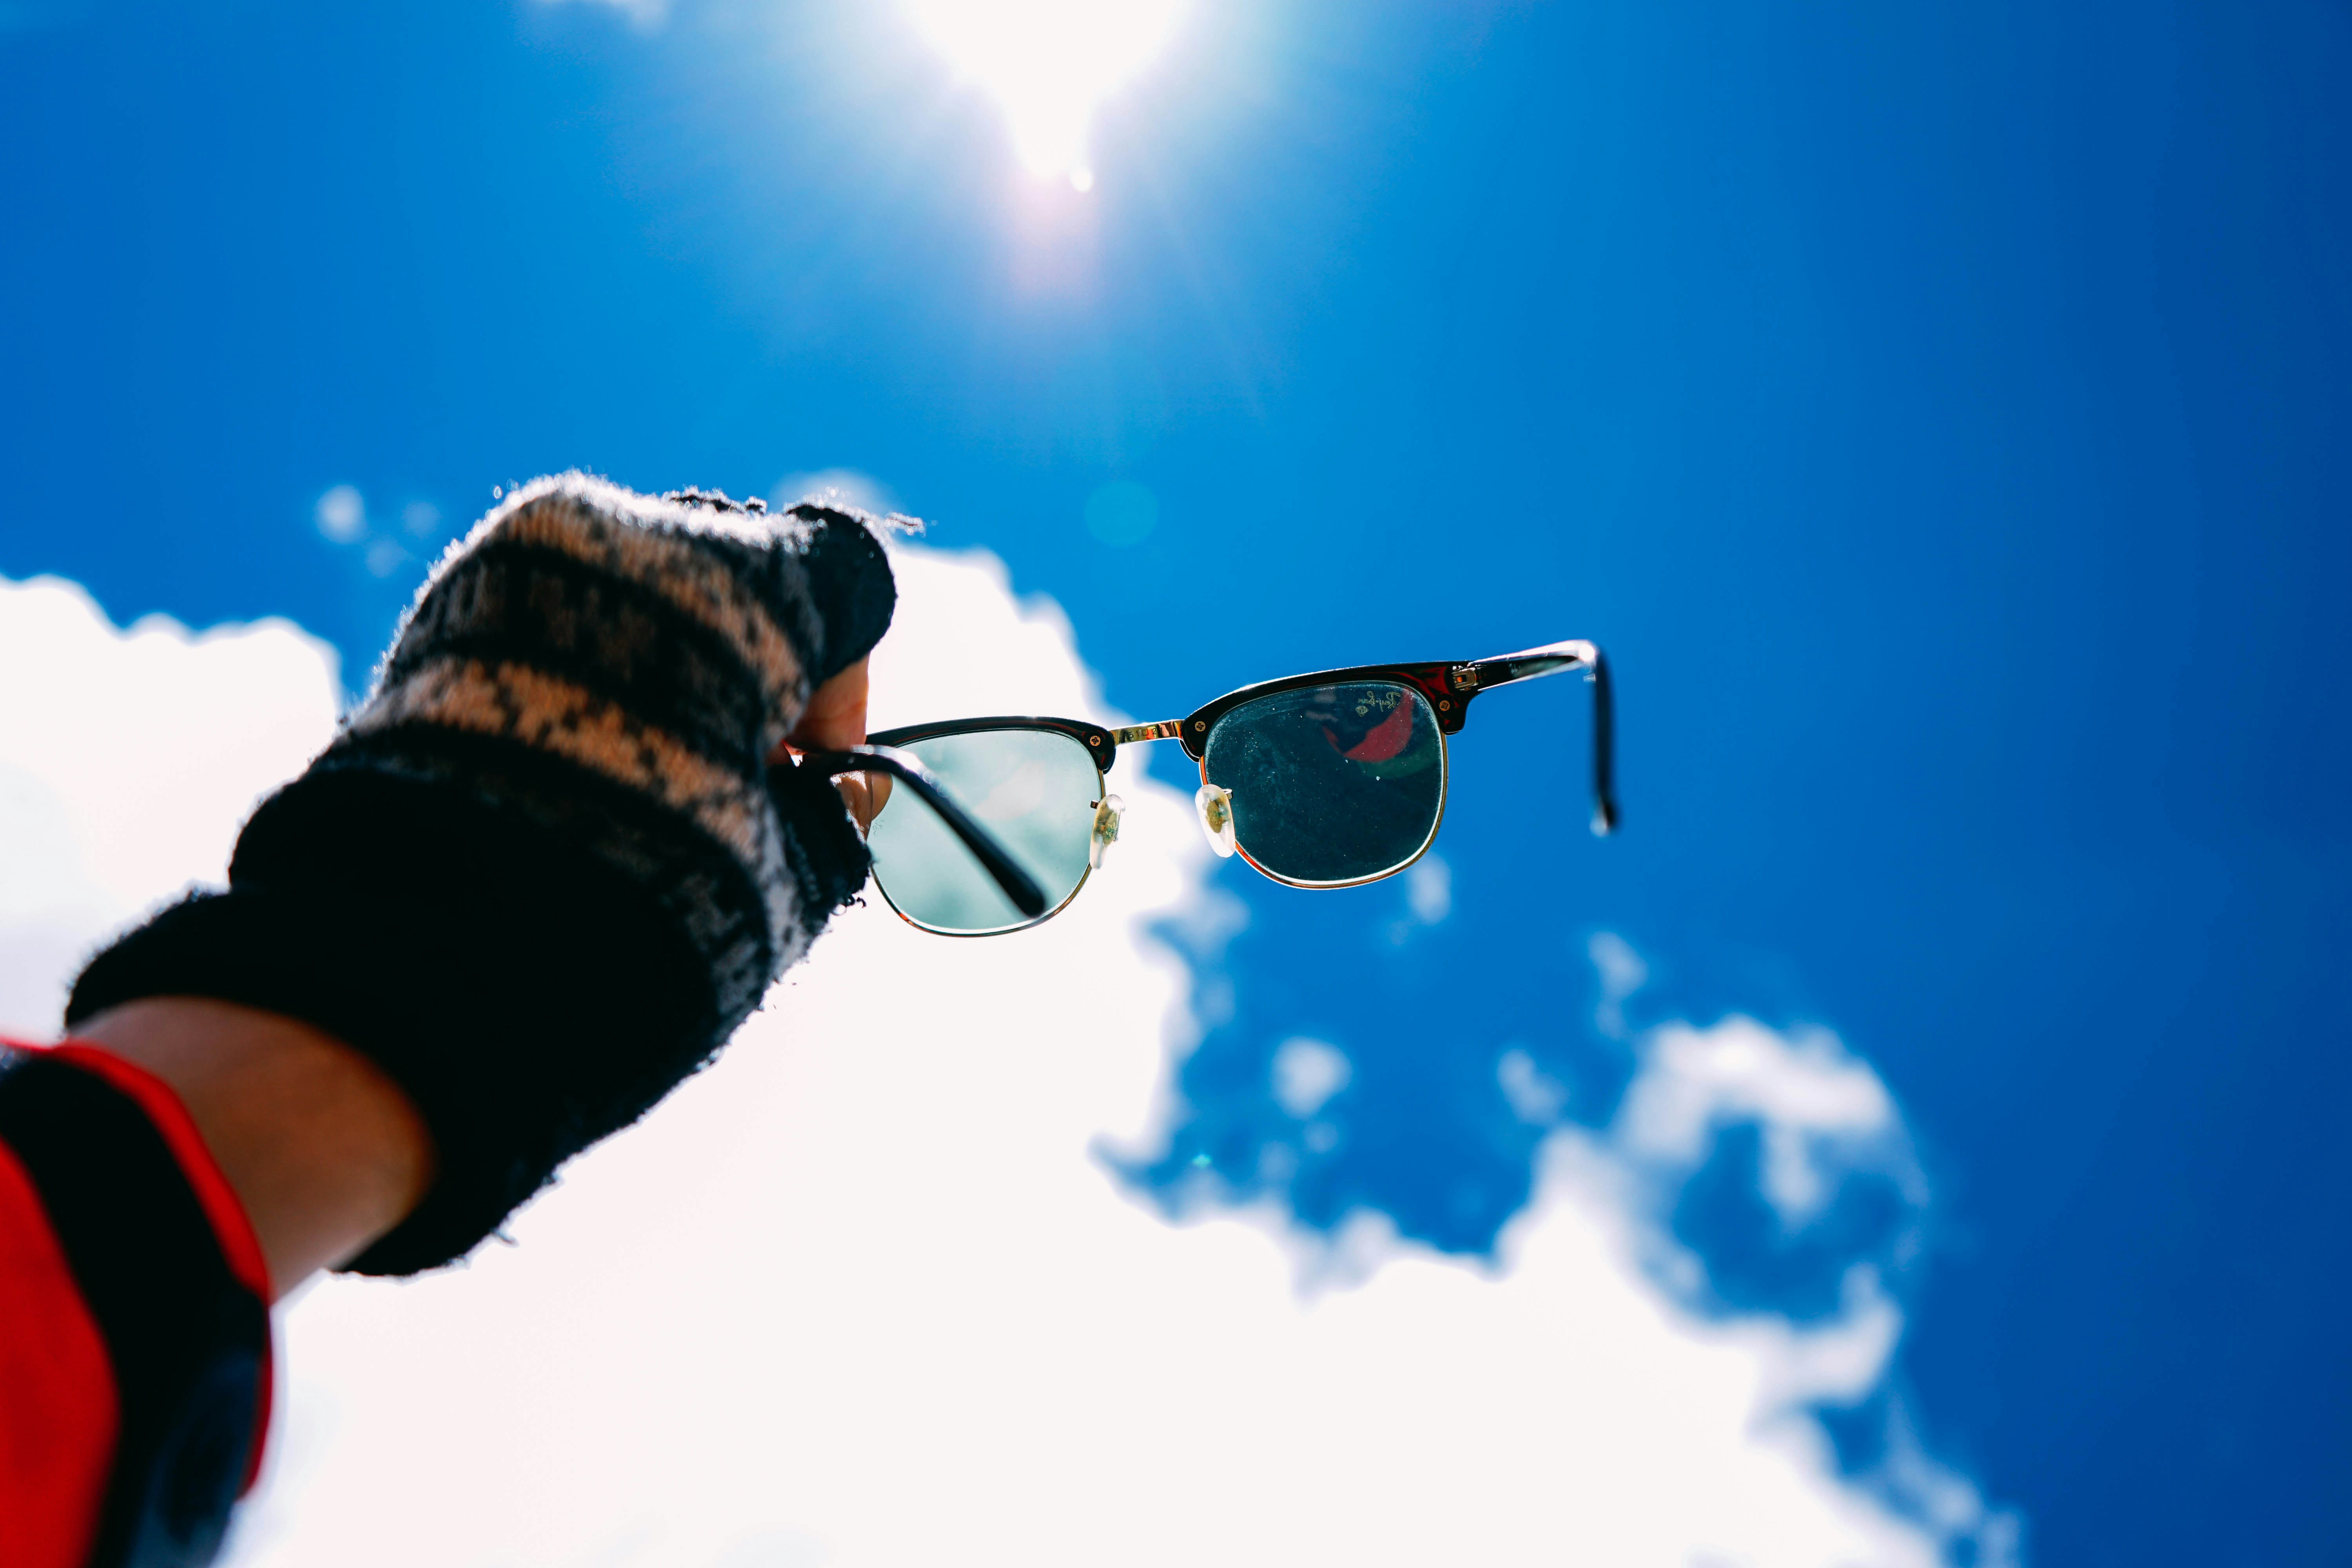 2019 cheap ray ban sunglasses preScRIPTion online 2019